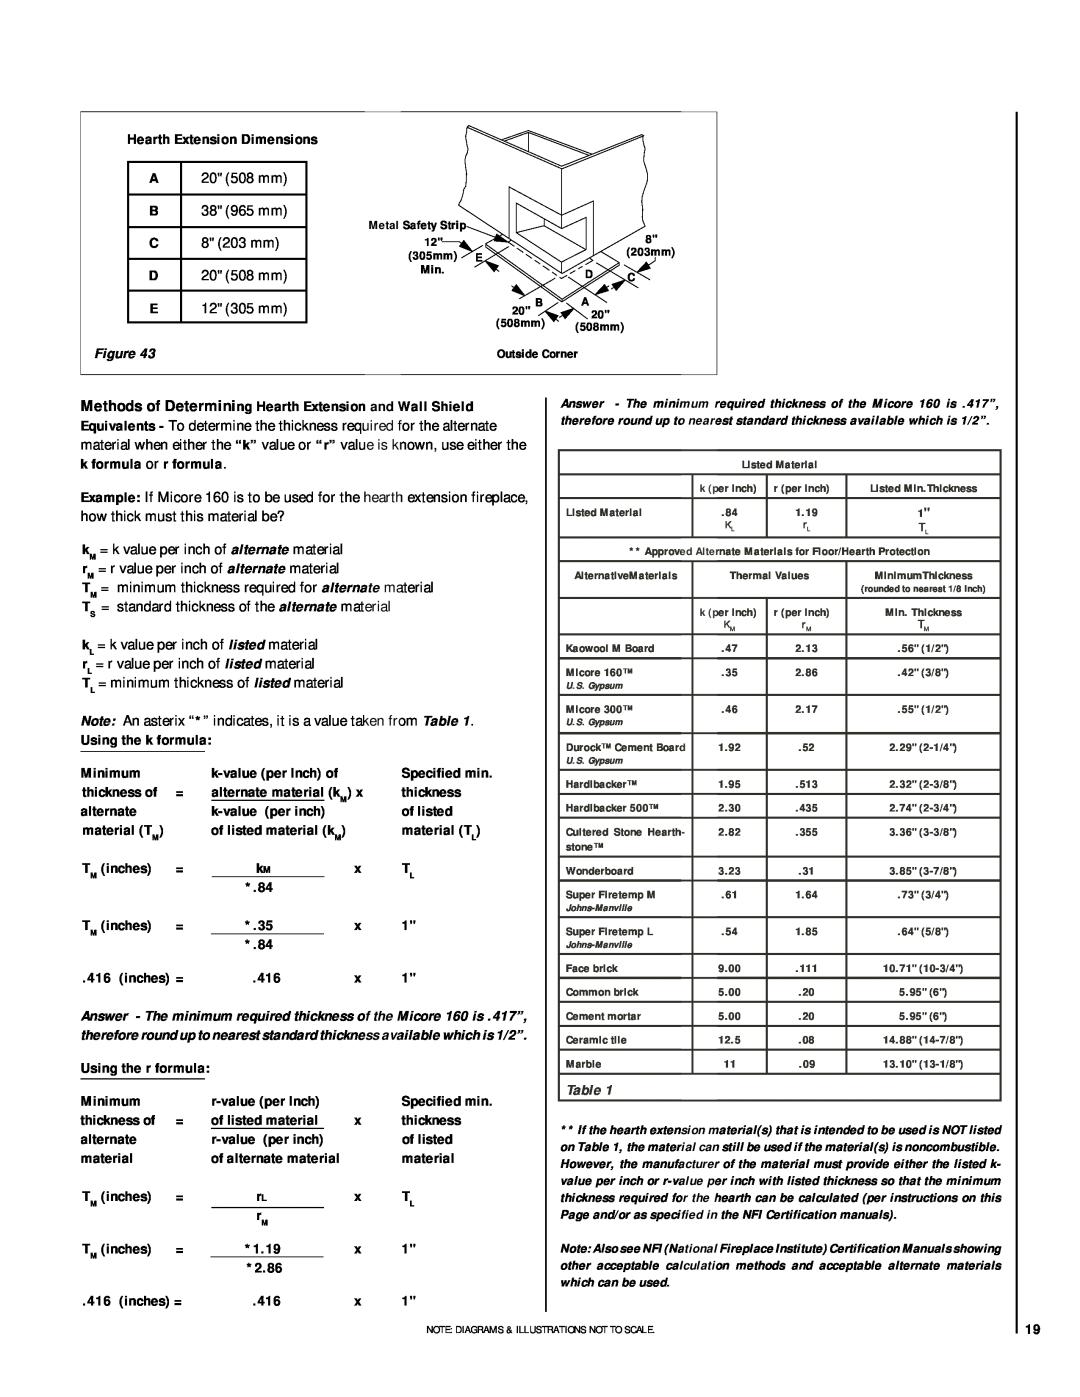 Lennox Hearth CR-3835R Hearth Extension Dimensions, 20 508 mm, 38 965 mm, 8 203 mm, 12 305 mm, Using the k formula, 2.86 